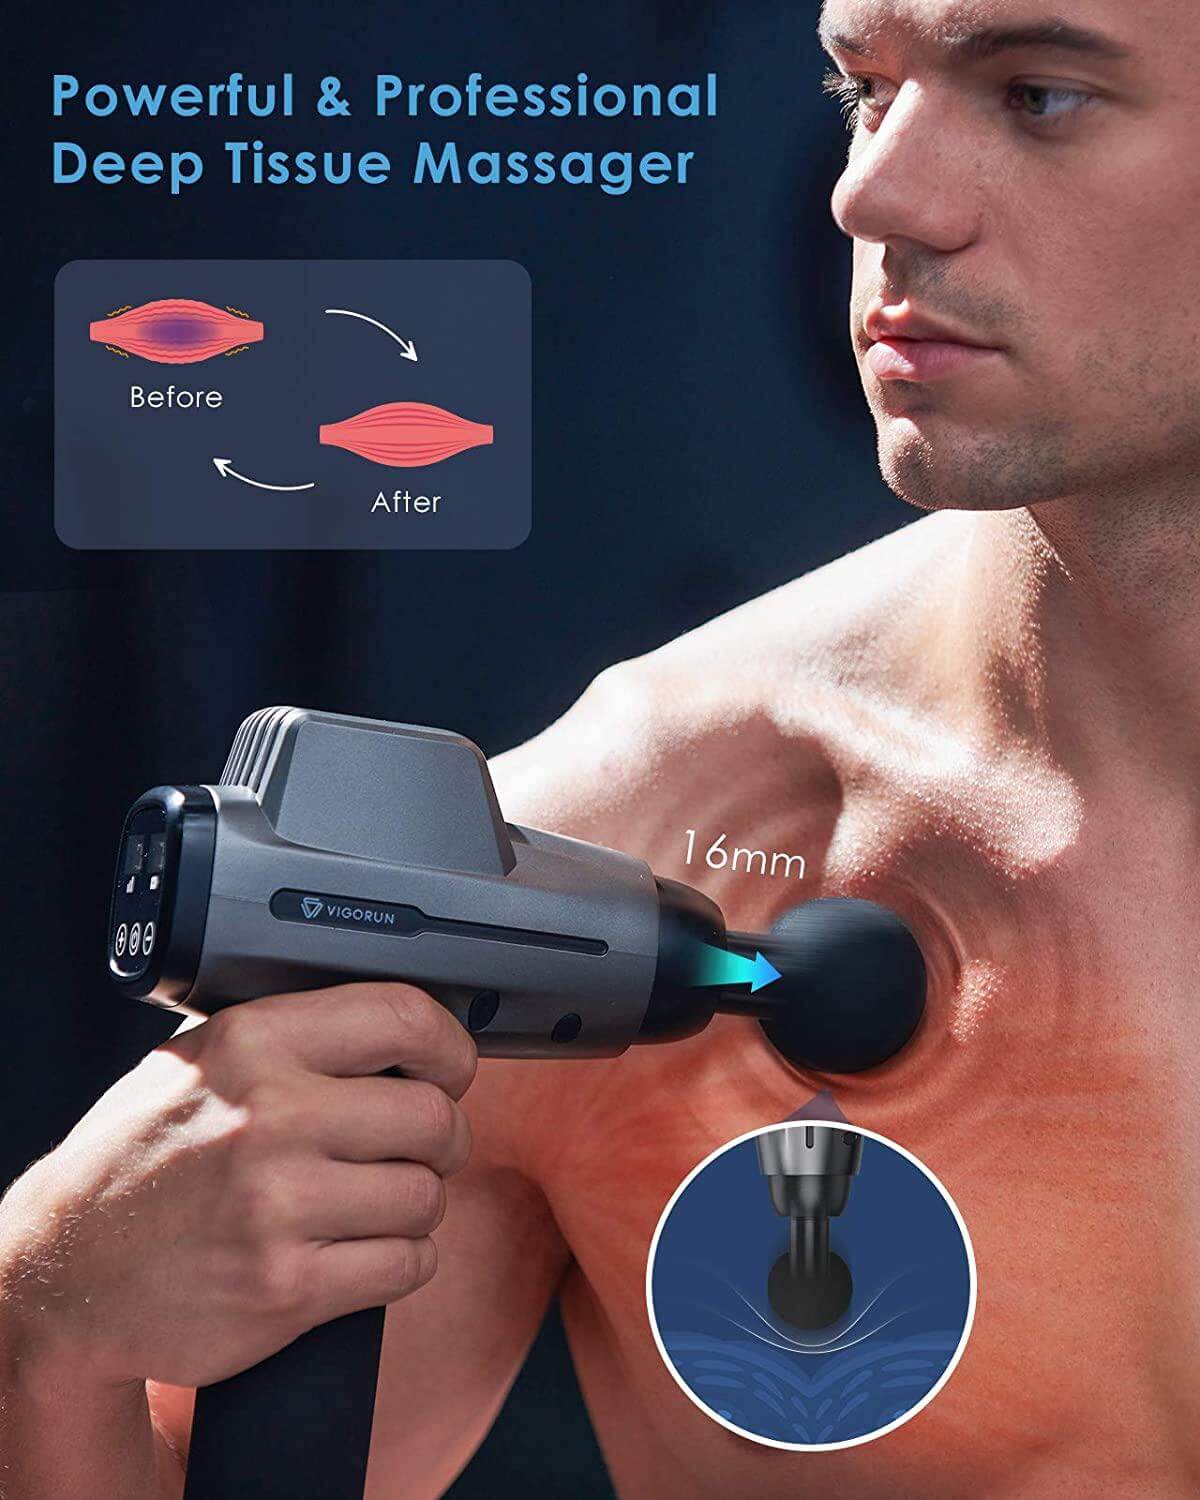 Vigorun 2600mAh Deep Tissue Massage Gun